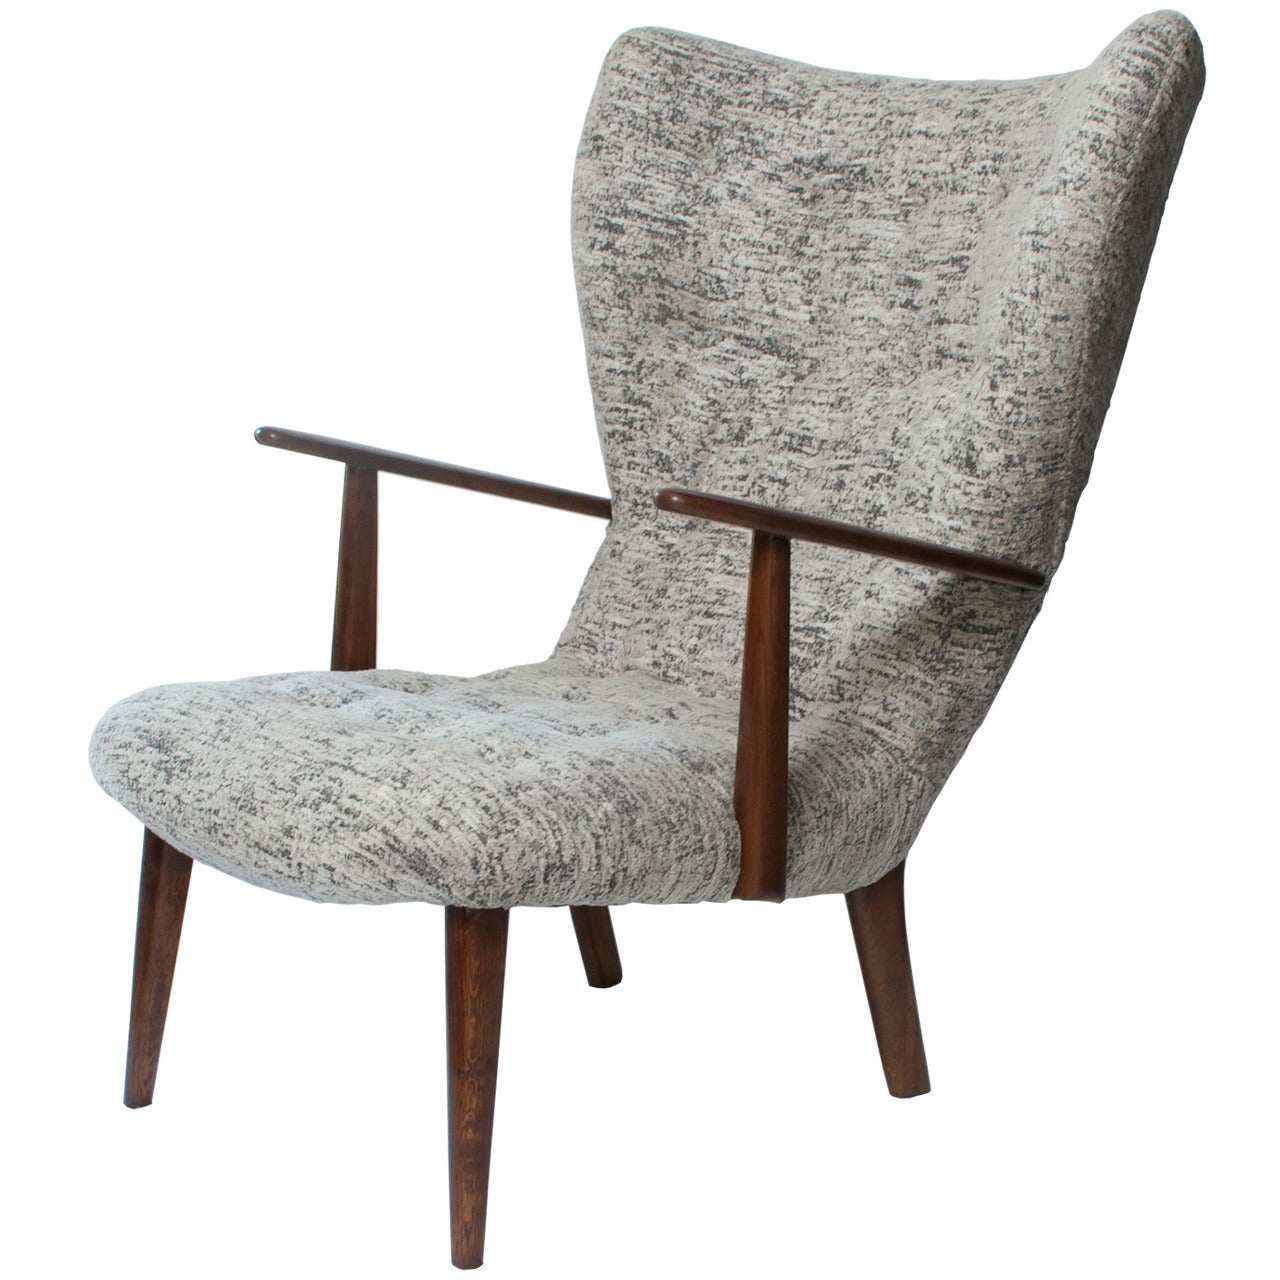 Dramatic Danish Midcentury Wingback Chair in Heathered Velvet Upholstery